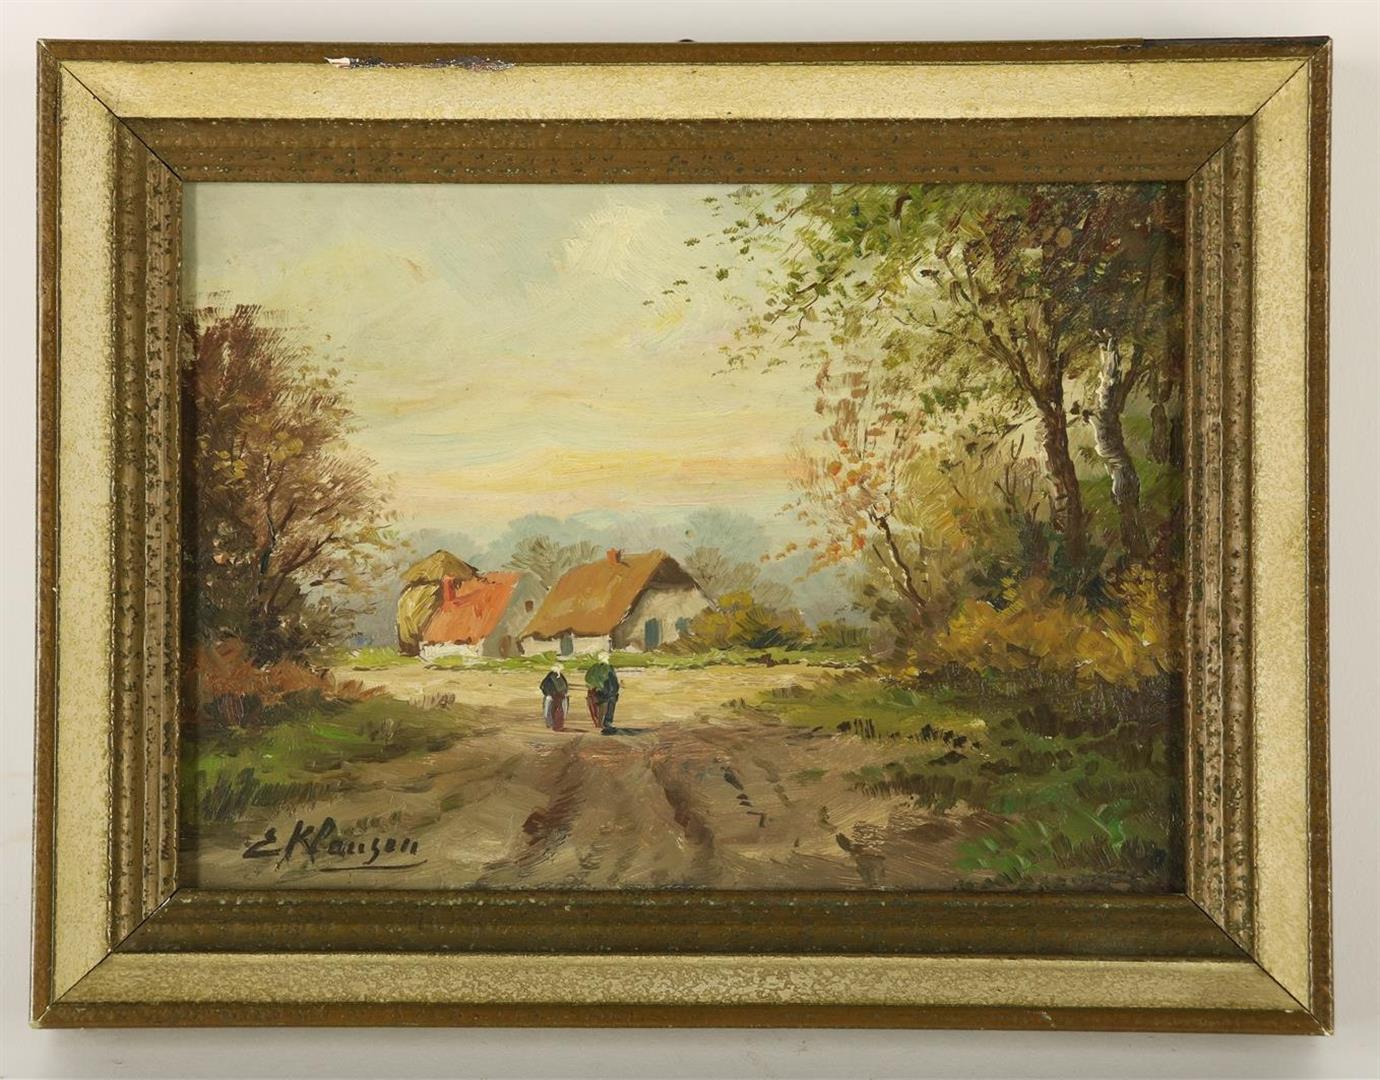 Landscape with figures, signed lower left E. Klaassen, Twente painter, approx 1930, oil on - Image 2 of 4